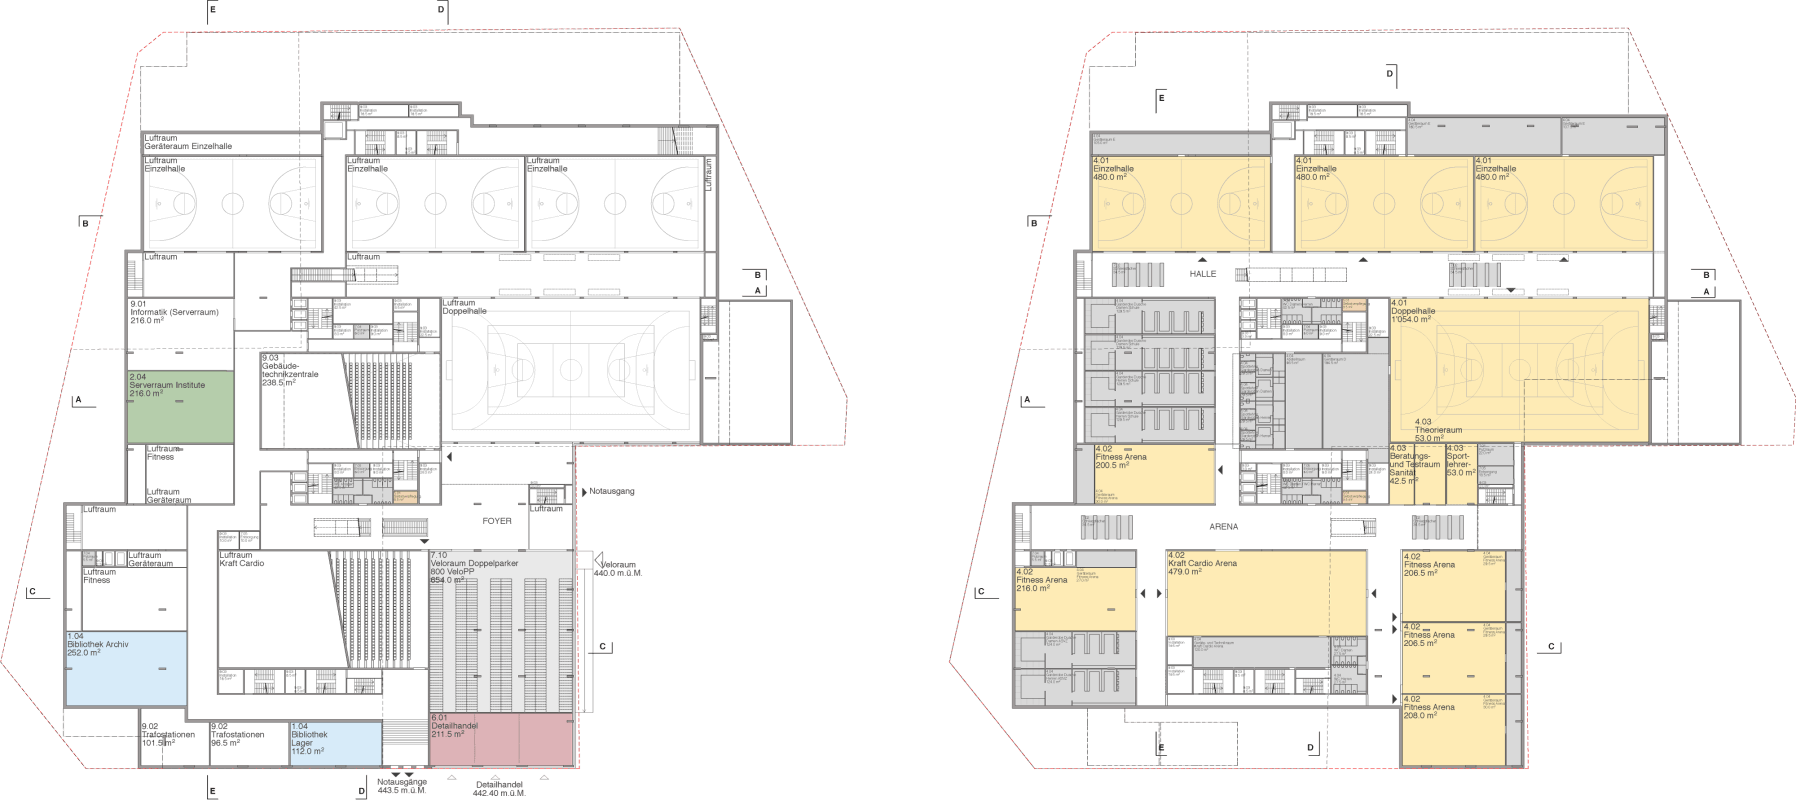 Forum Uni ZH. Floor plans, mezzanine level and basement level, scale 1:500. (ZG-UG)